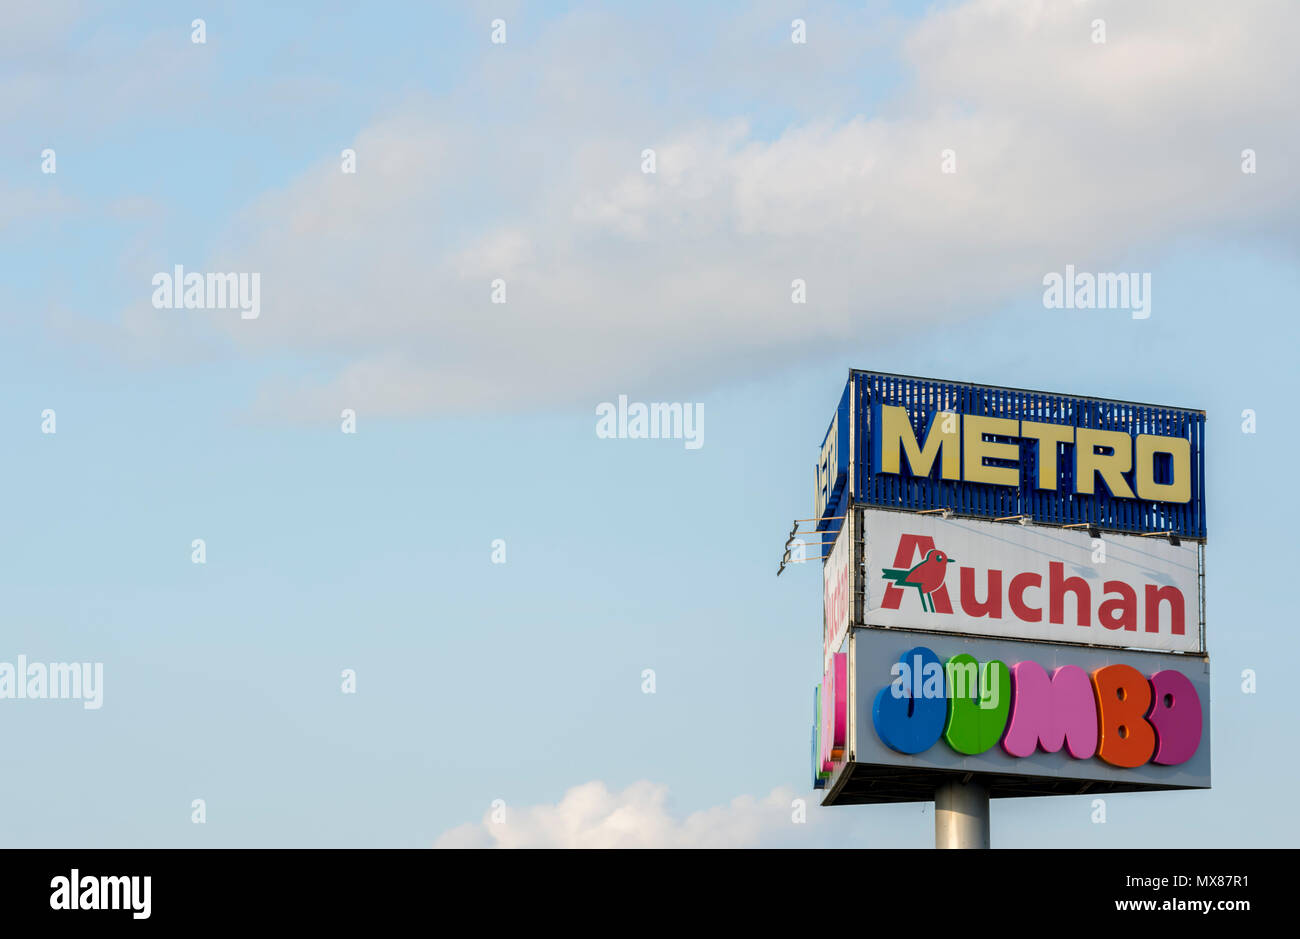 Metro logo, auchand hypermarket logo and Jumbo logo Bucharest 21 May 2018 Stock Photo